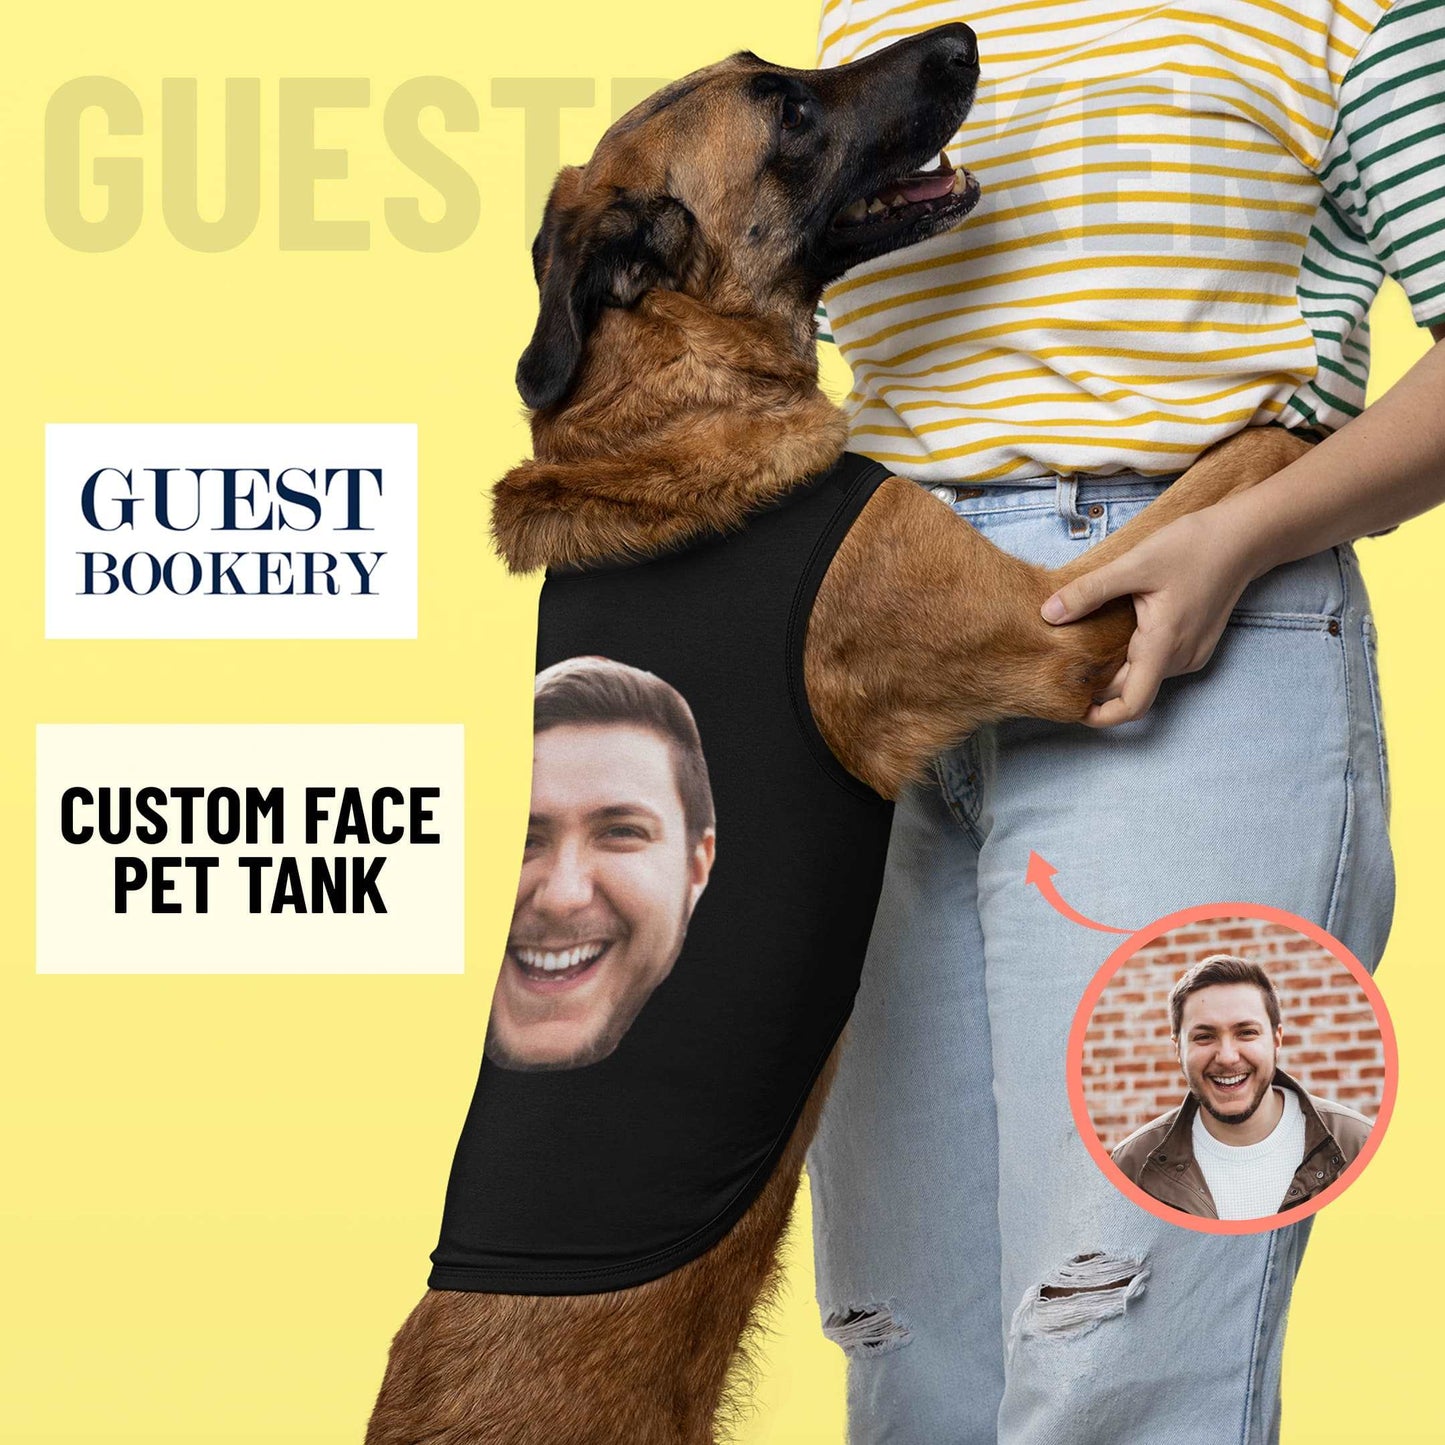 Custom Face Pet Tank - Custom Face - Funny Dog Clothes - Custom Pet Tank - Personalize - Customize - Dog Gift - Dog Accessory - Dog Clothes